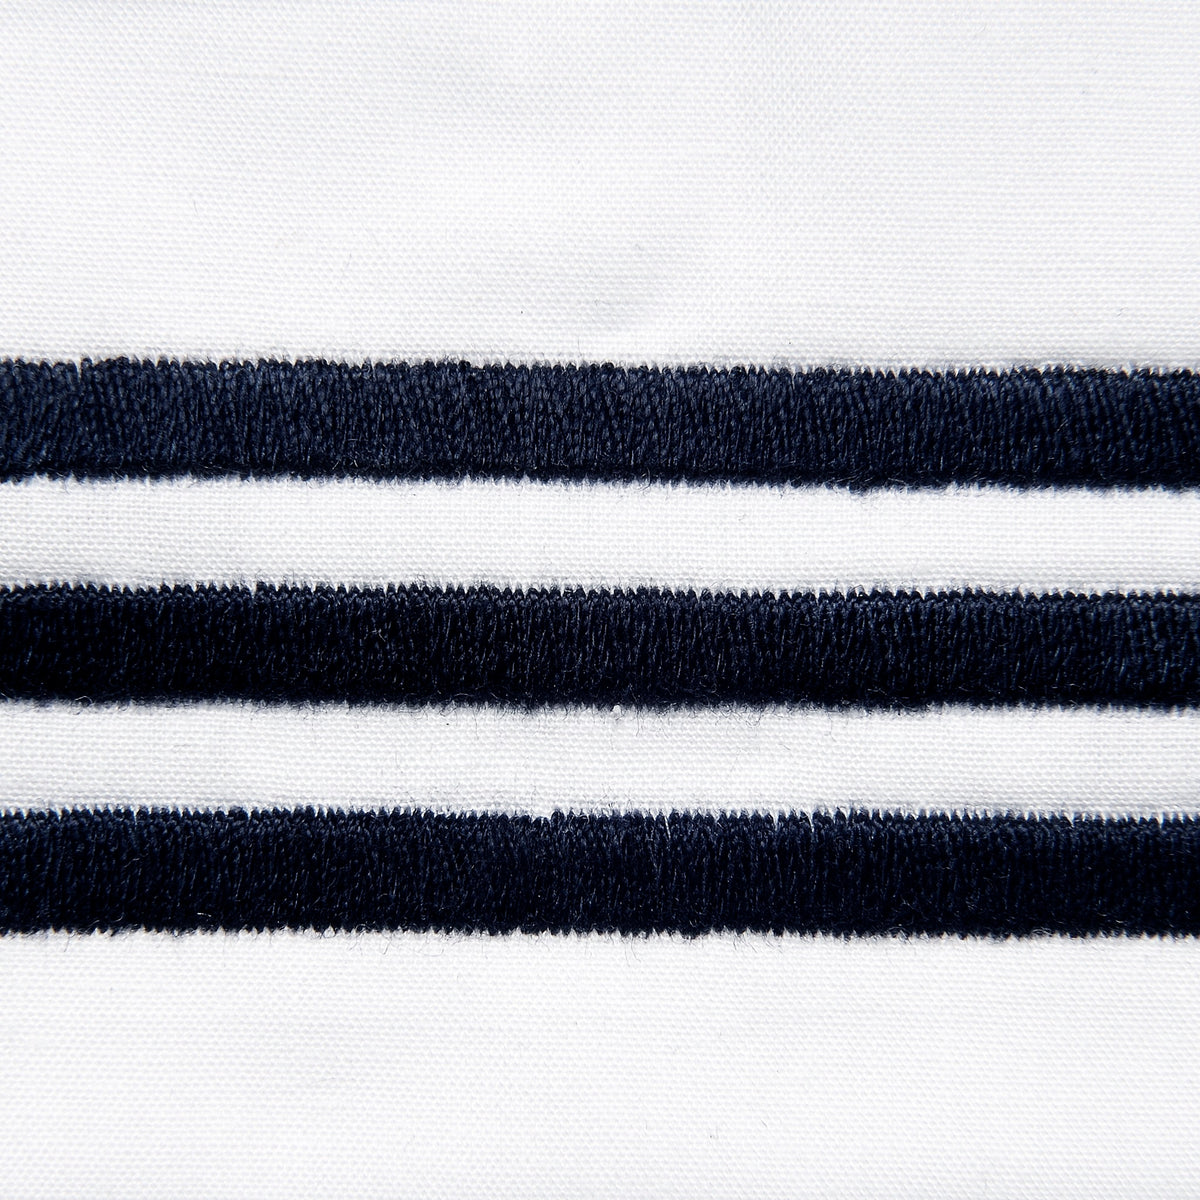 Swatch Sample of Signoria Platinum Percale Bedding in White/Midnight Blue Color